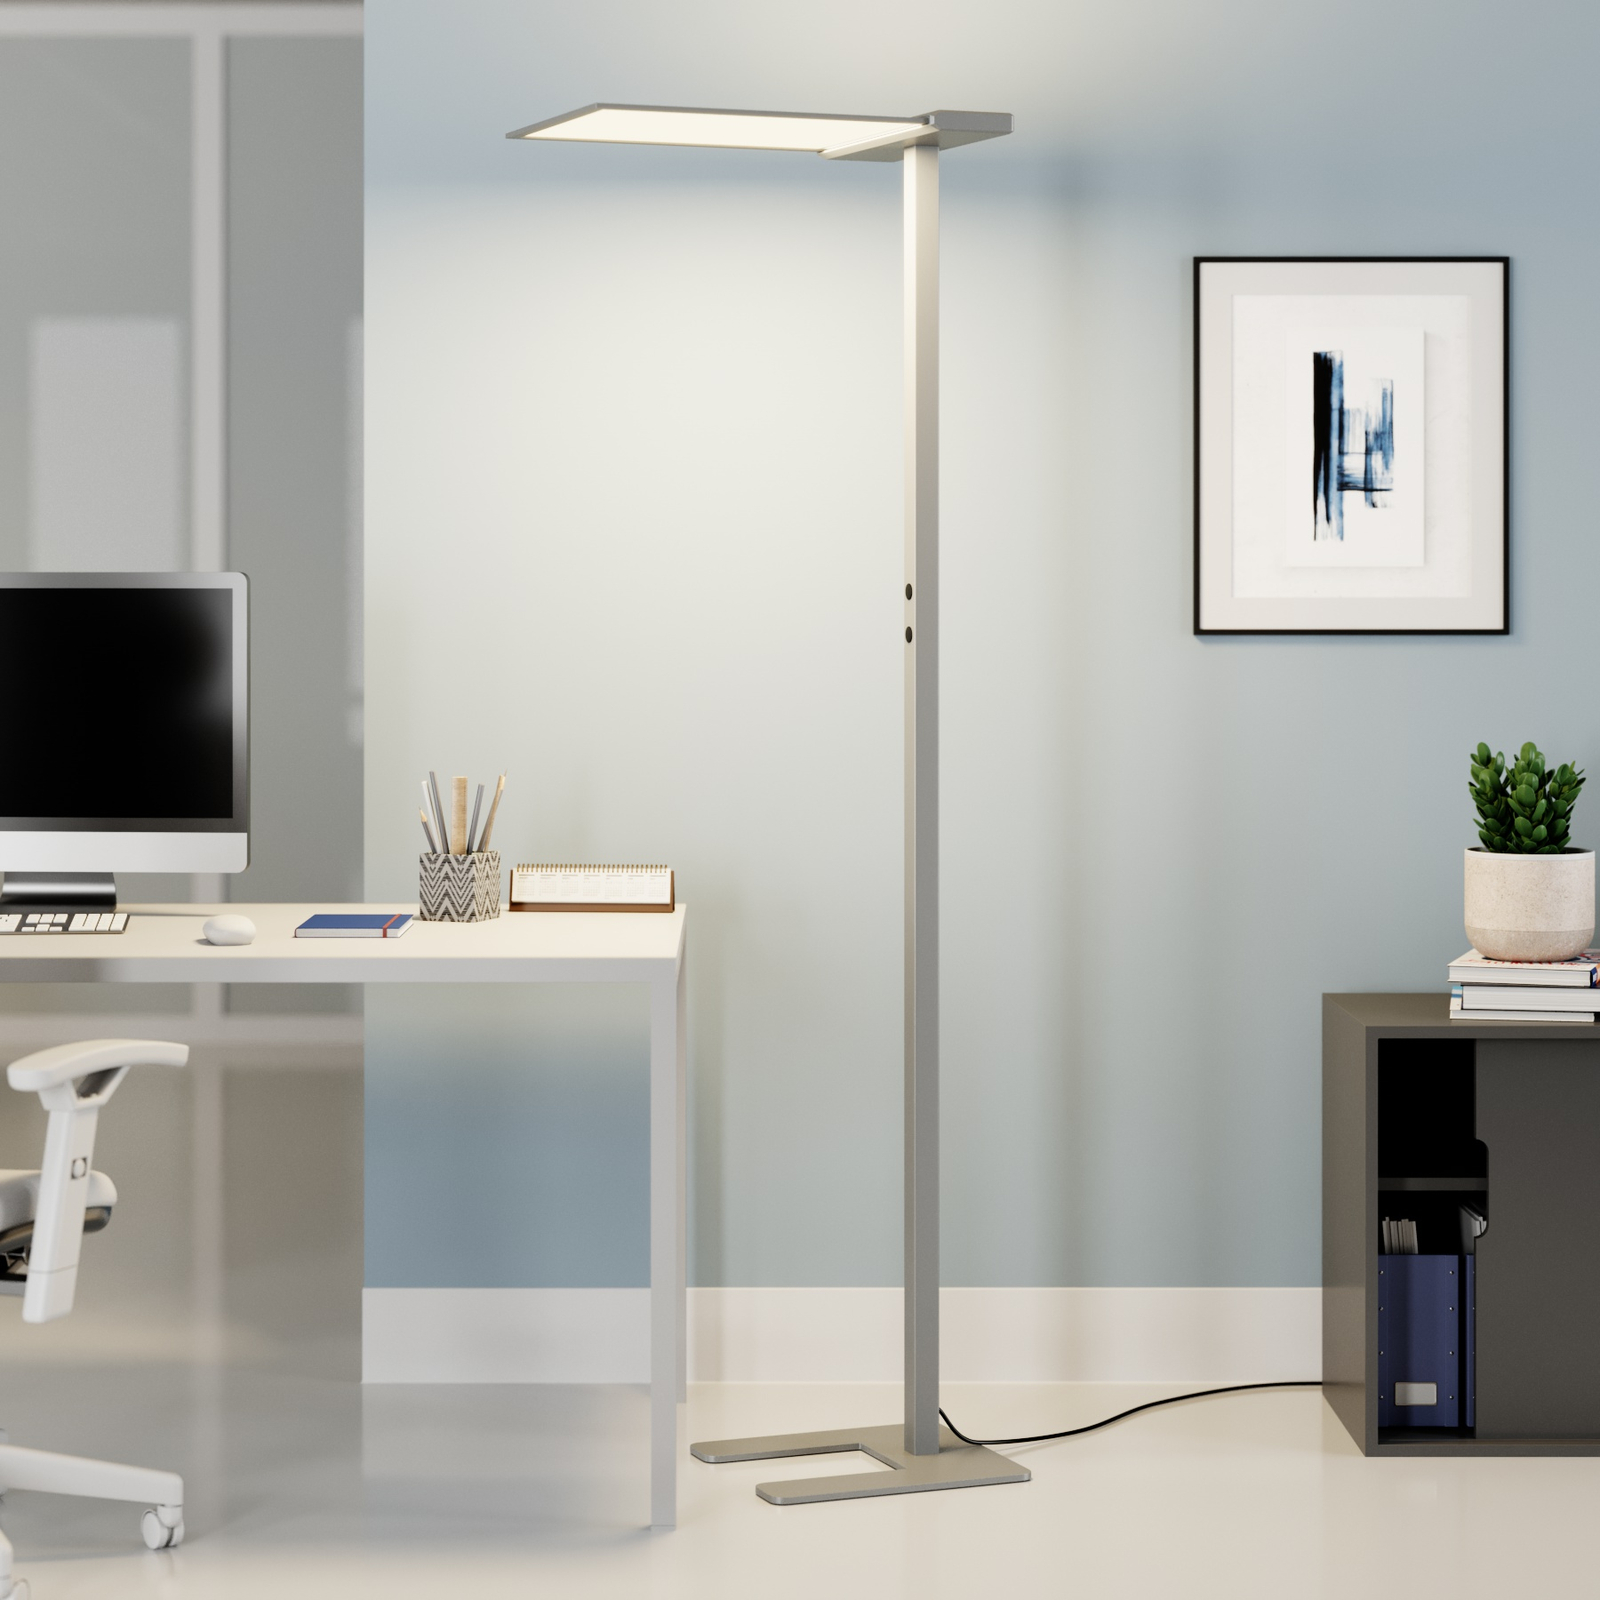 LED-office-gulvlampe Esmael 36W + 20W dimmer'